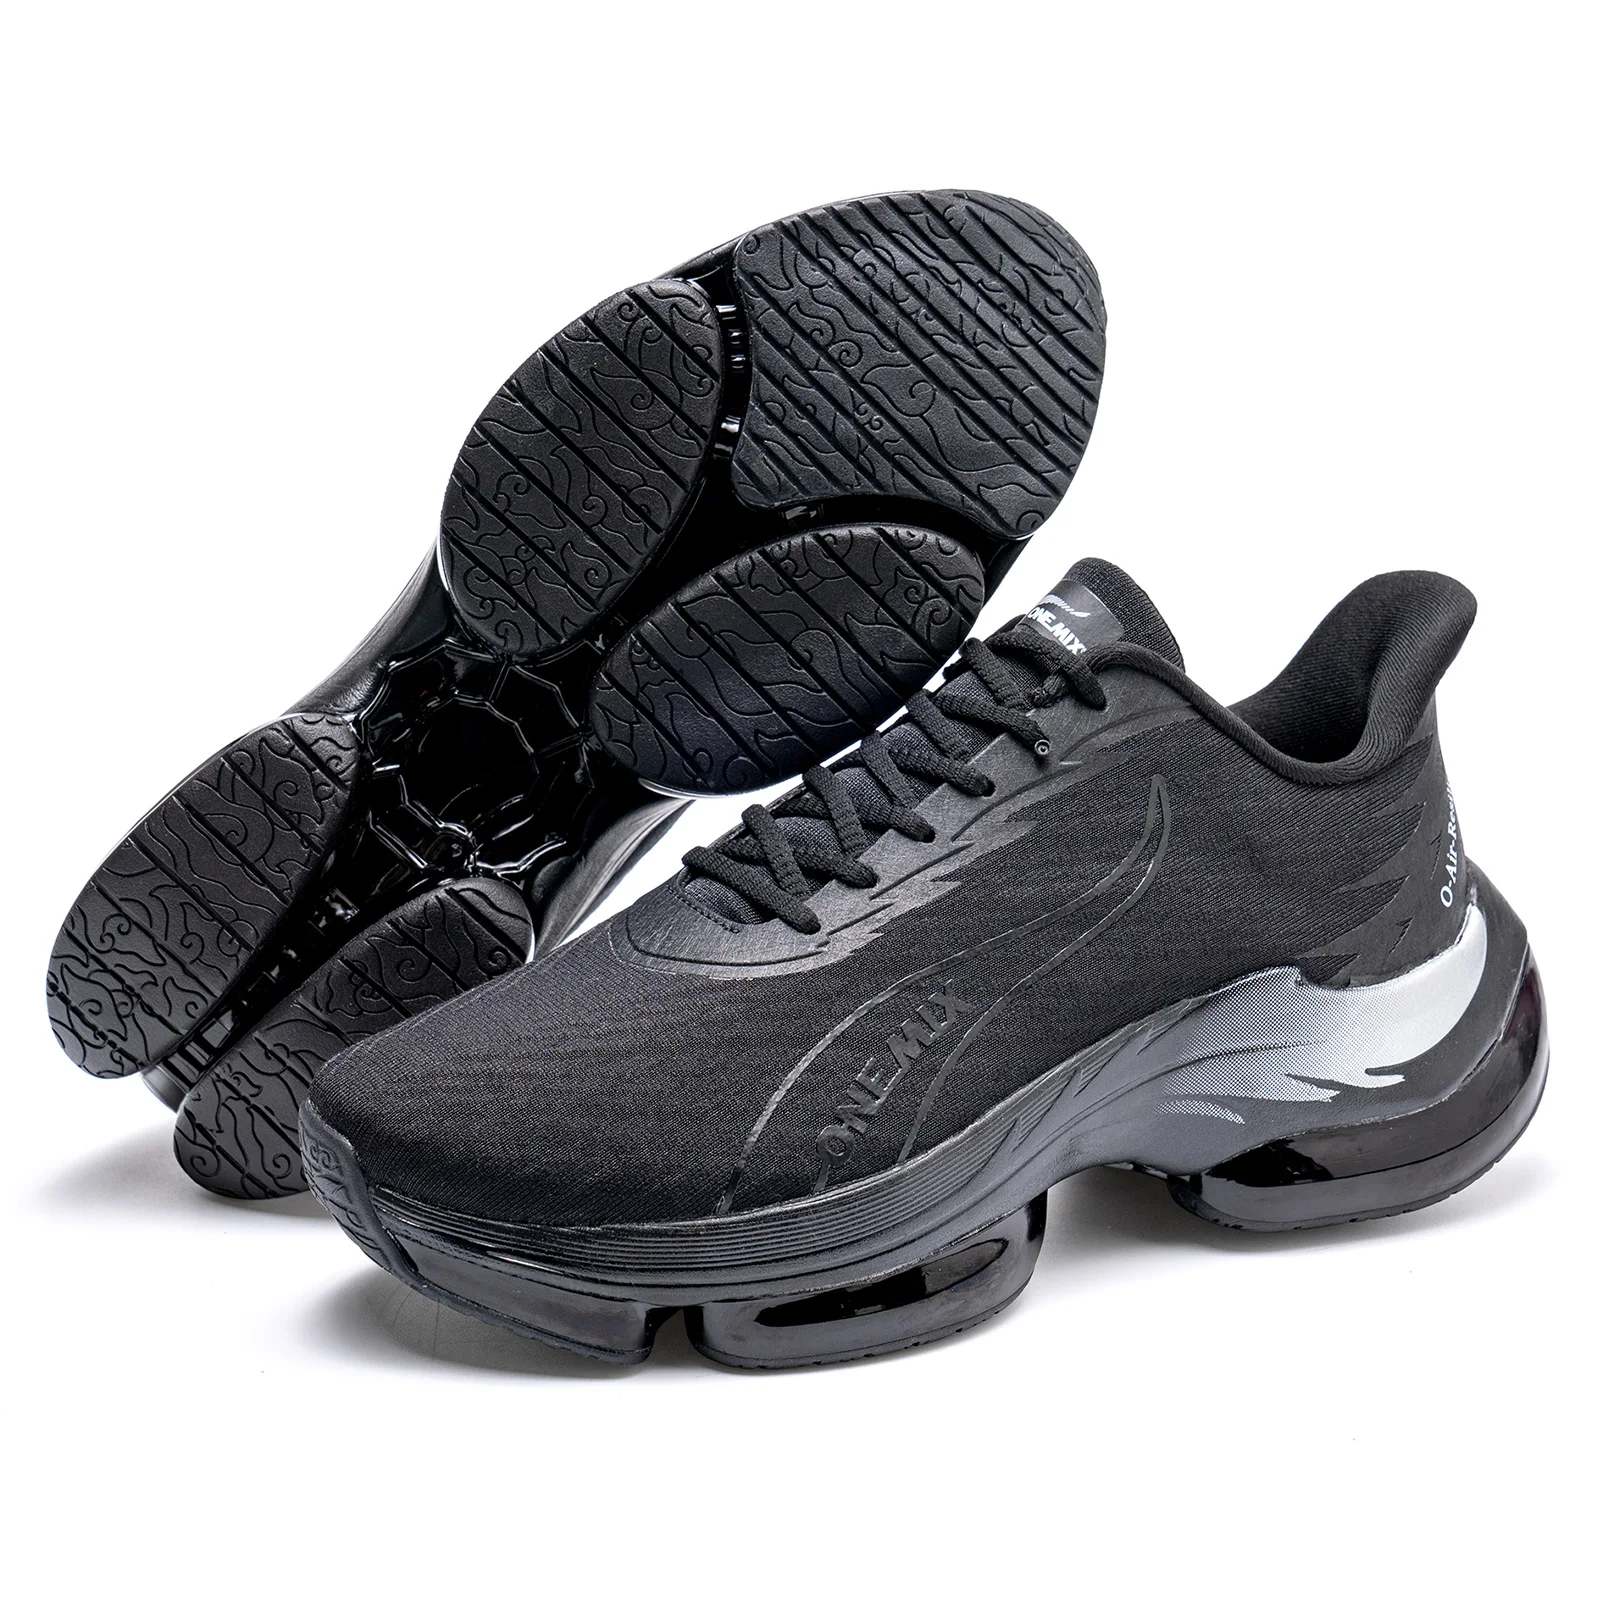 Onemix men's running shoes breathable hommes sport chaussures de course outdoor athletic walking sneakers plus size 35-47 shoes